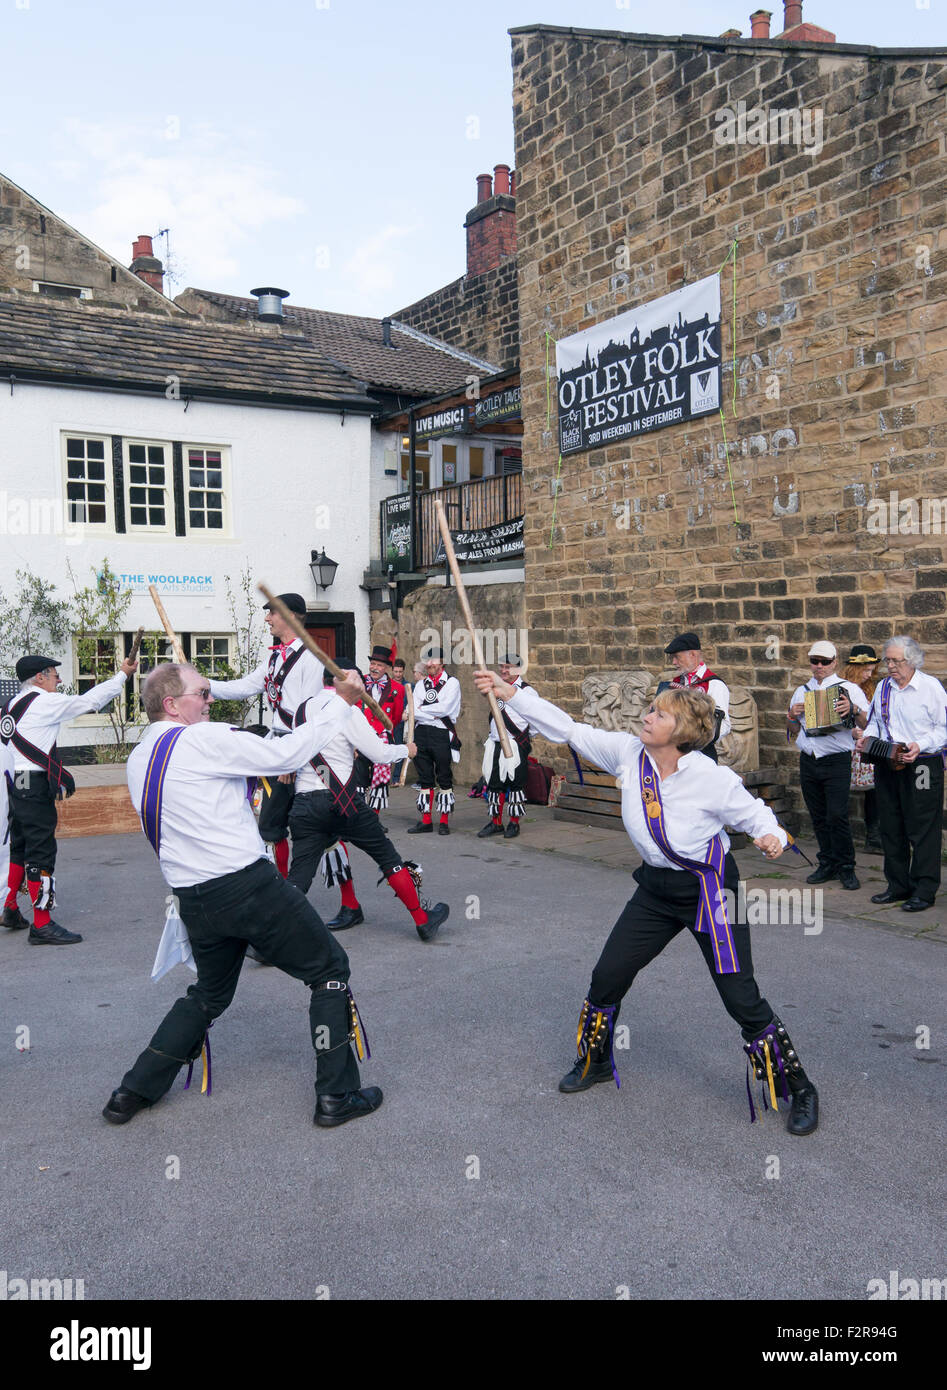 Kern Morris dance at Otley Folk Festival 2015, West Yorkshire, England, UK Stock Photo